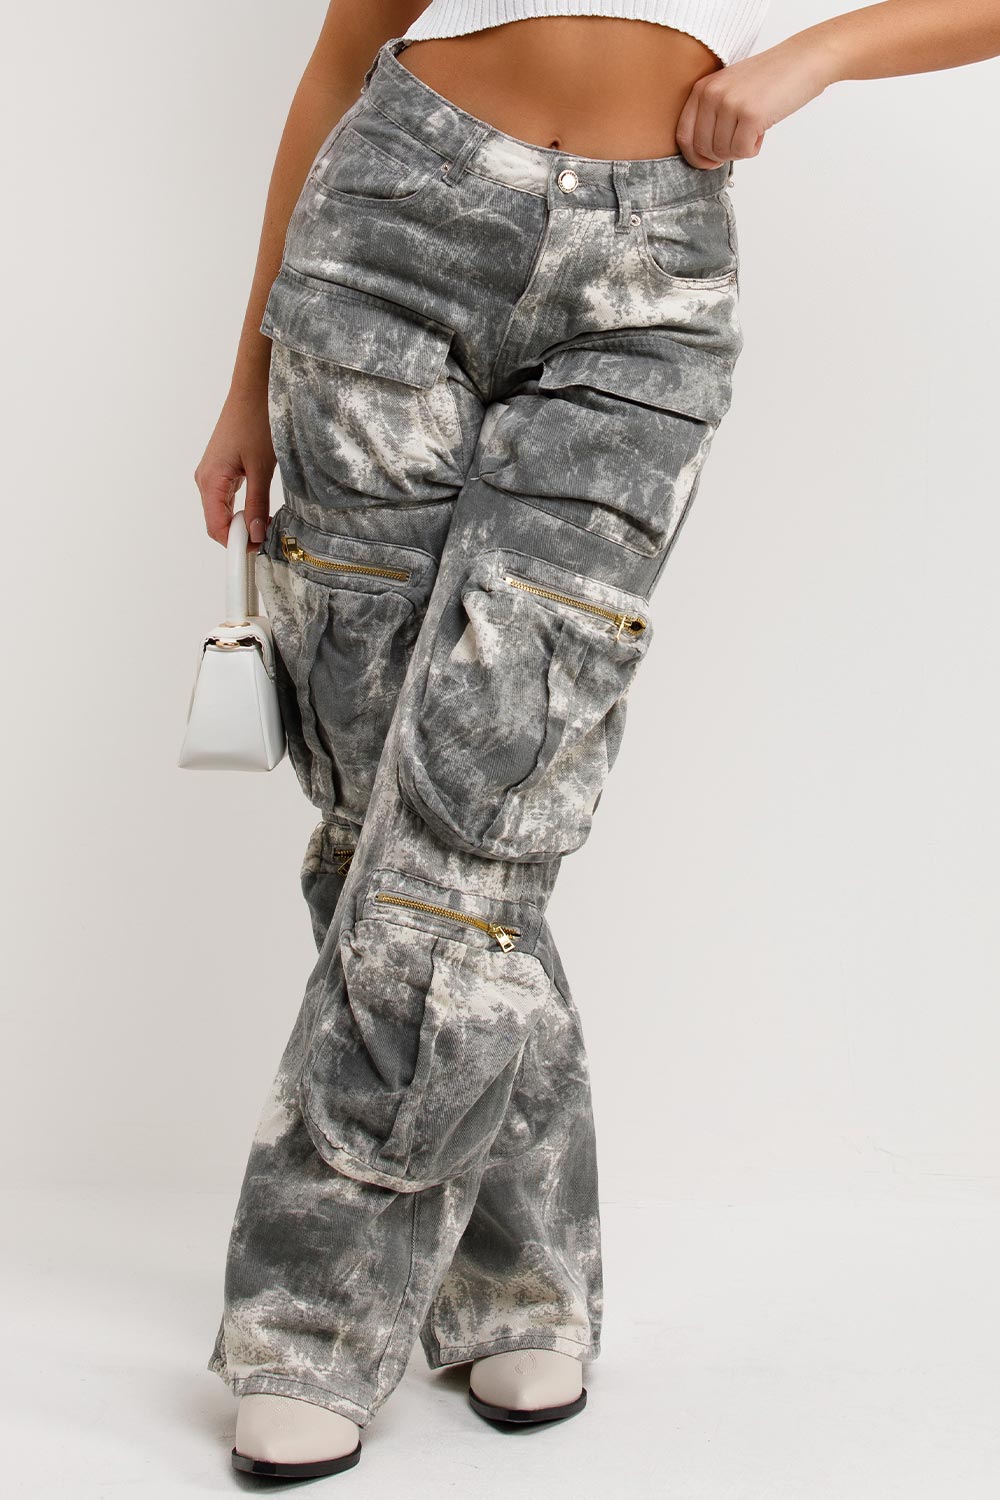 womens grey camo cargo jeans with pockets